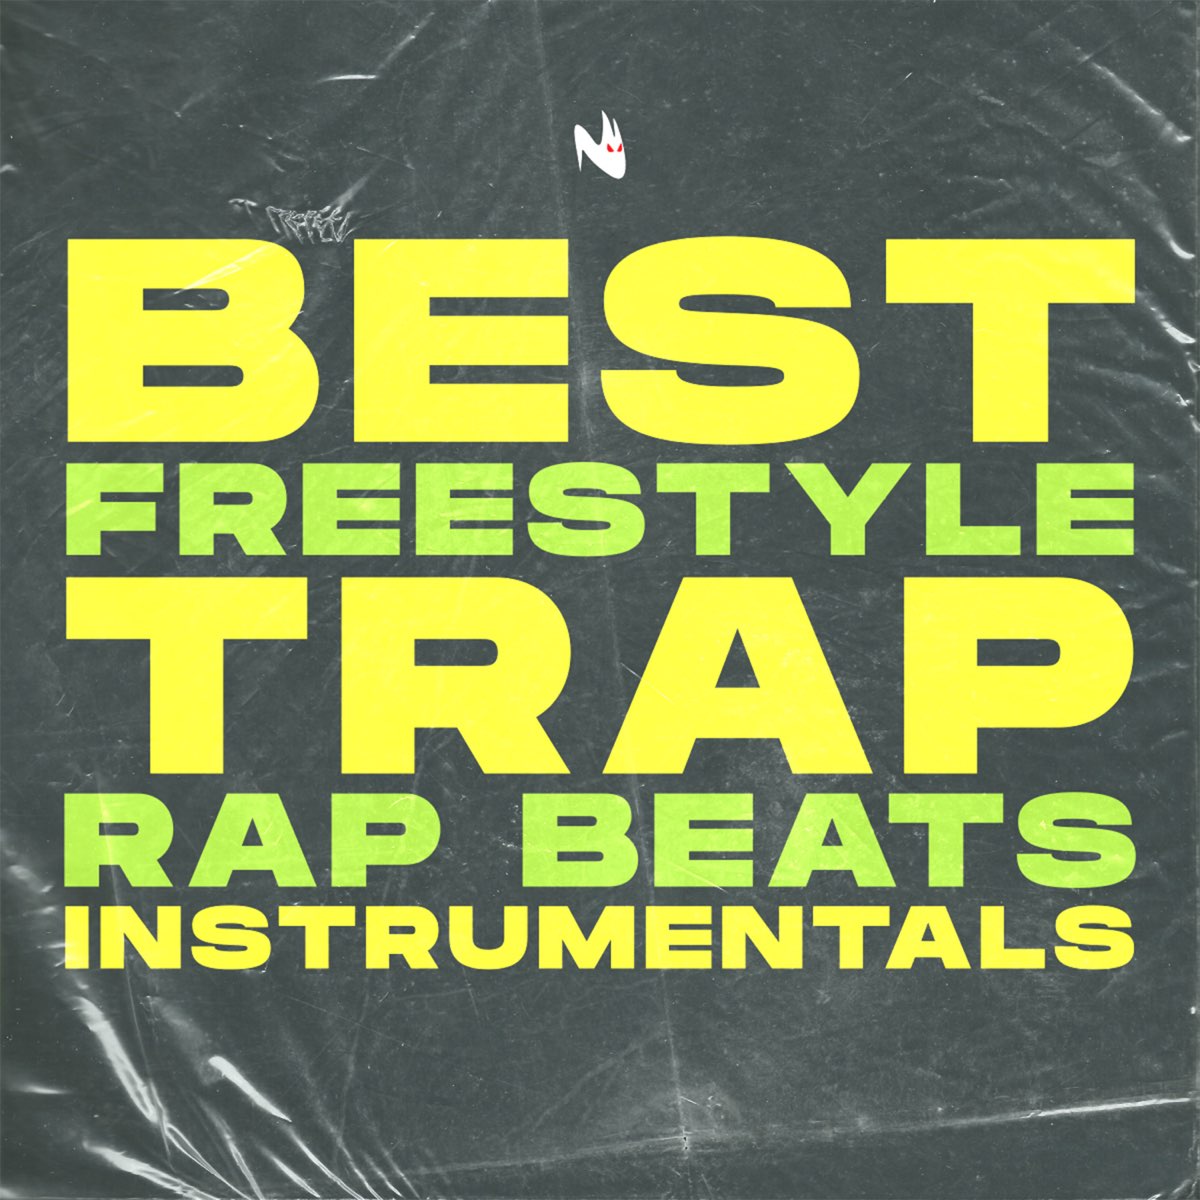 Best Freestyle Trap Beats I (Rap Instrumentals) by Black Beats Apple Music